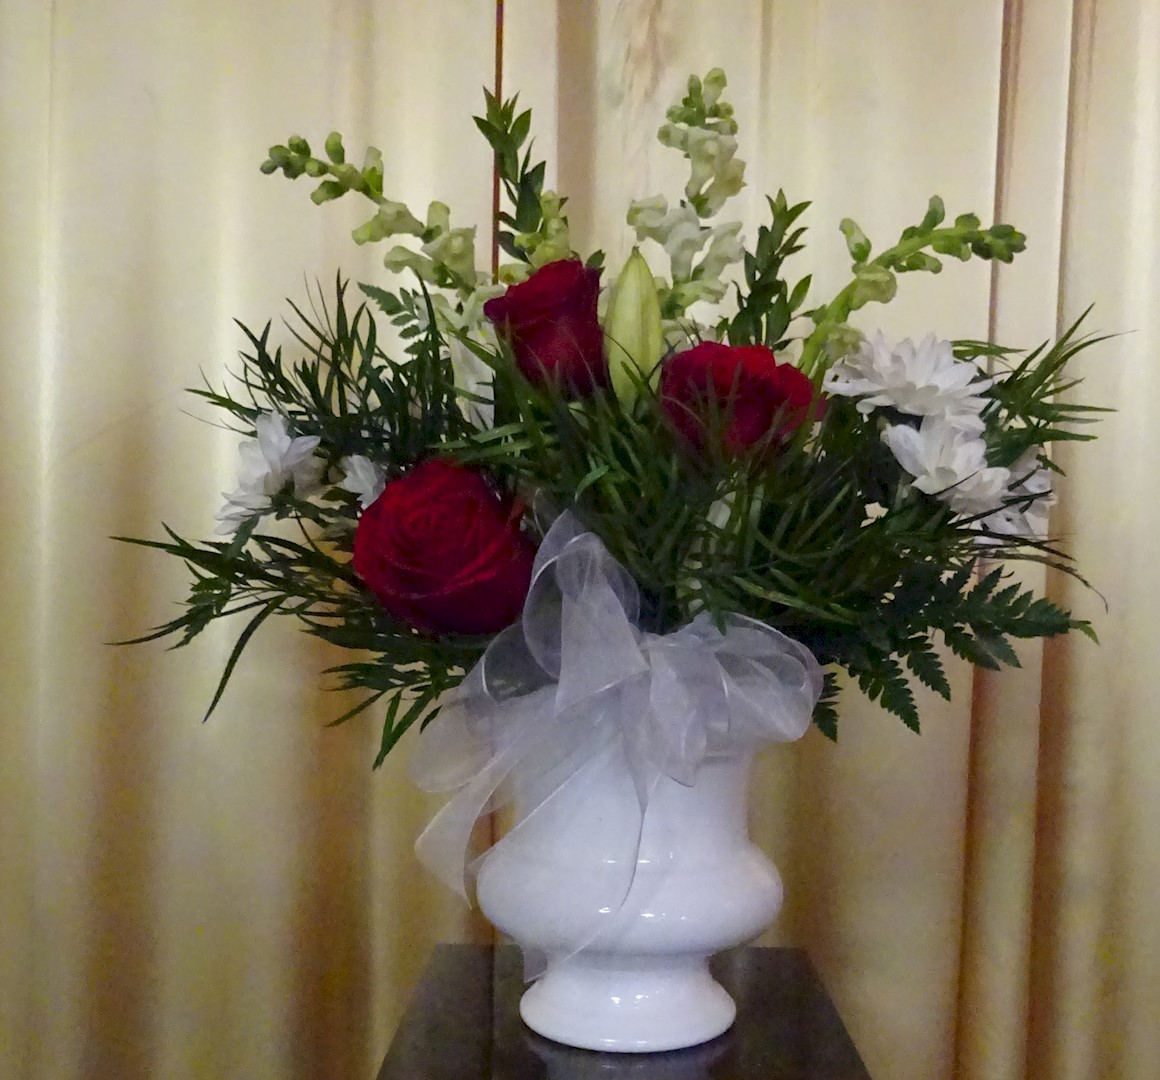 Flowers from Steve, Shivaun, Key, and Royal